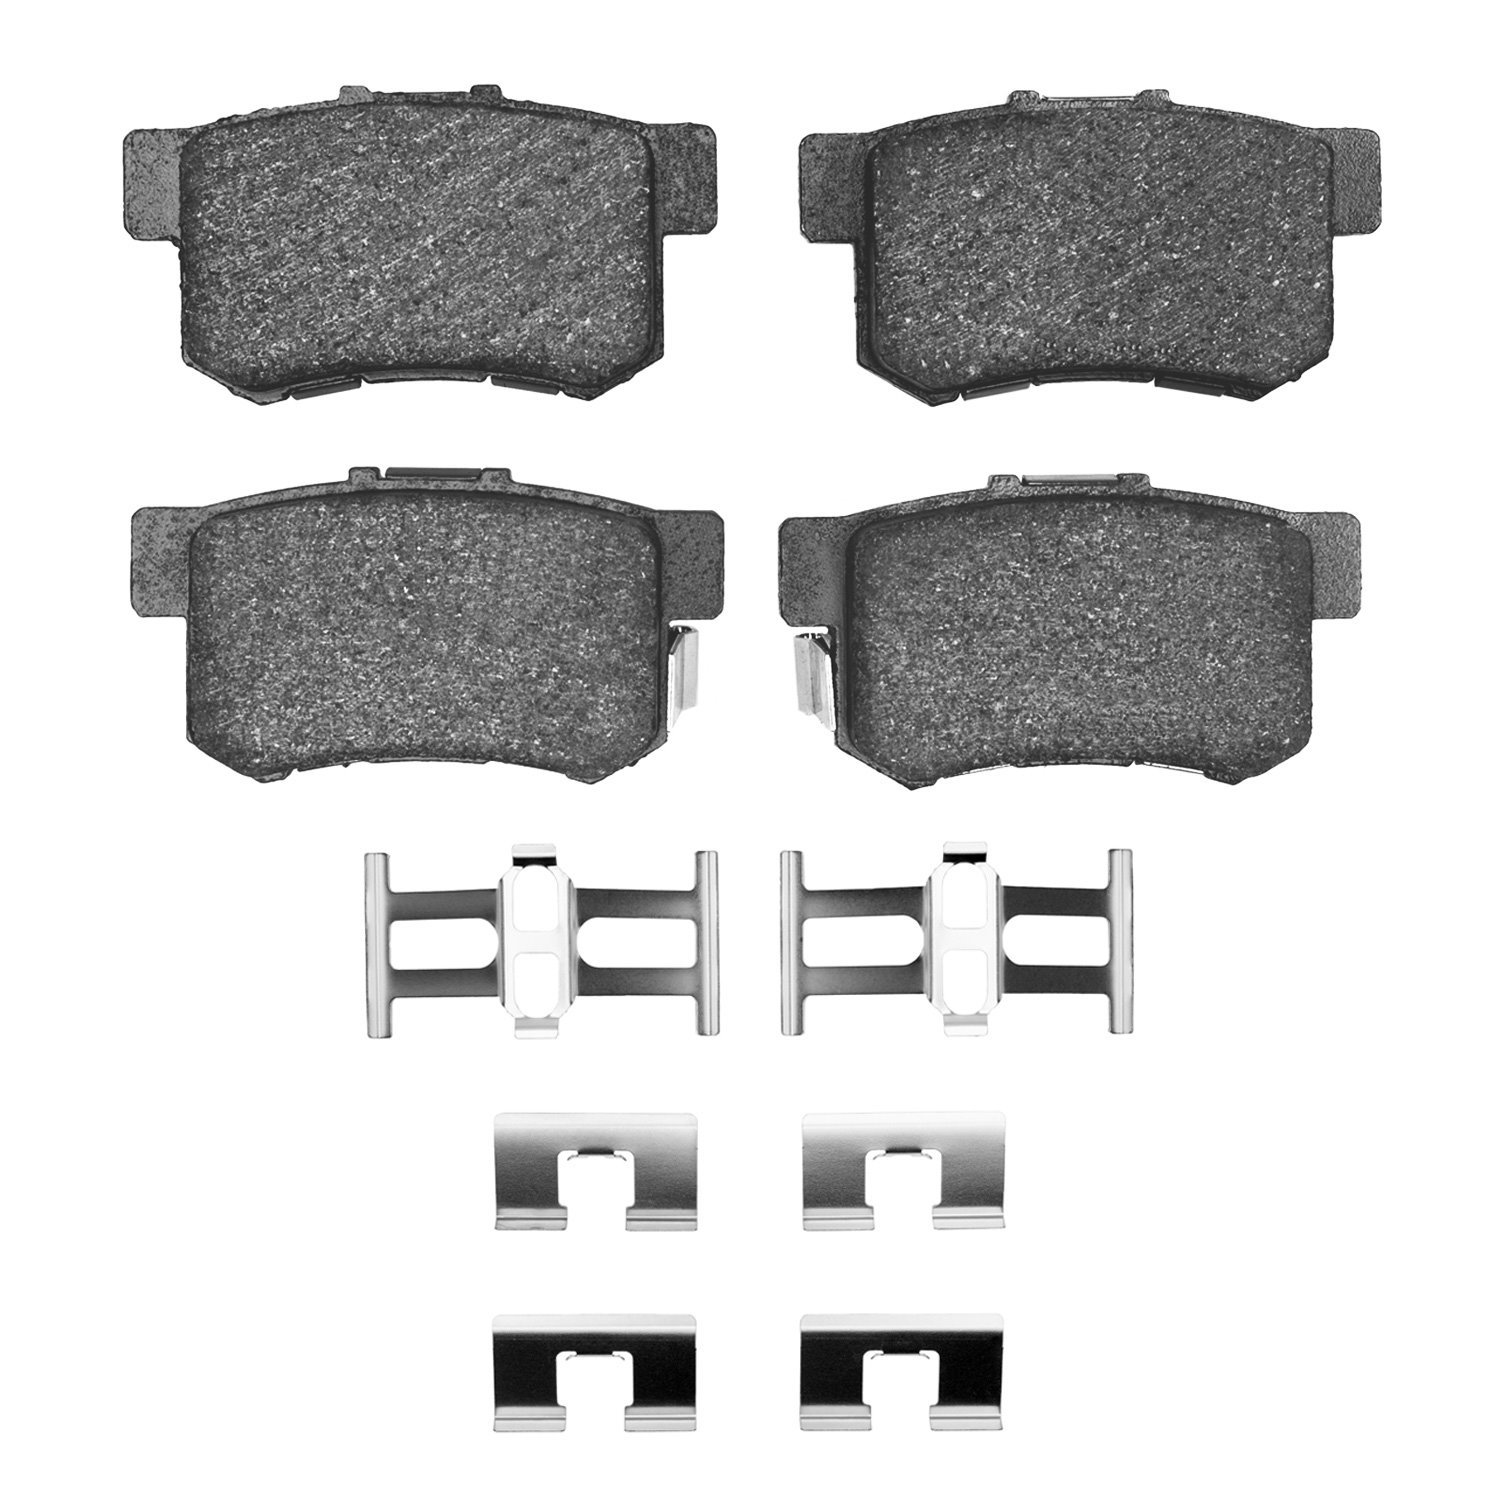 Semi-Metallic Brake Pads & Hardware Kit, 1991-2012 Fits Multiple Makes/Models, Position: Rear